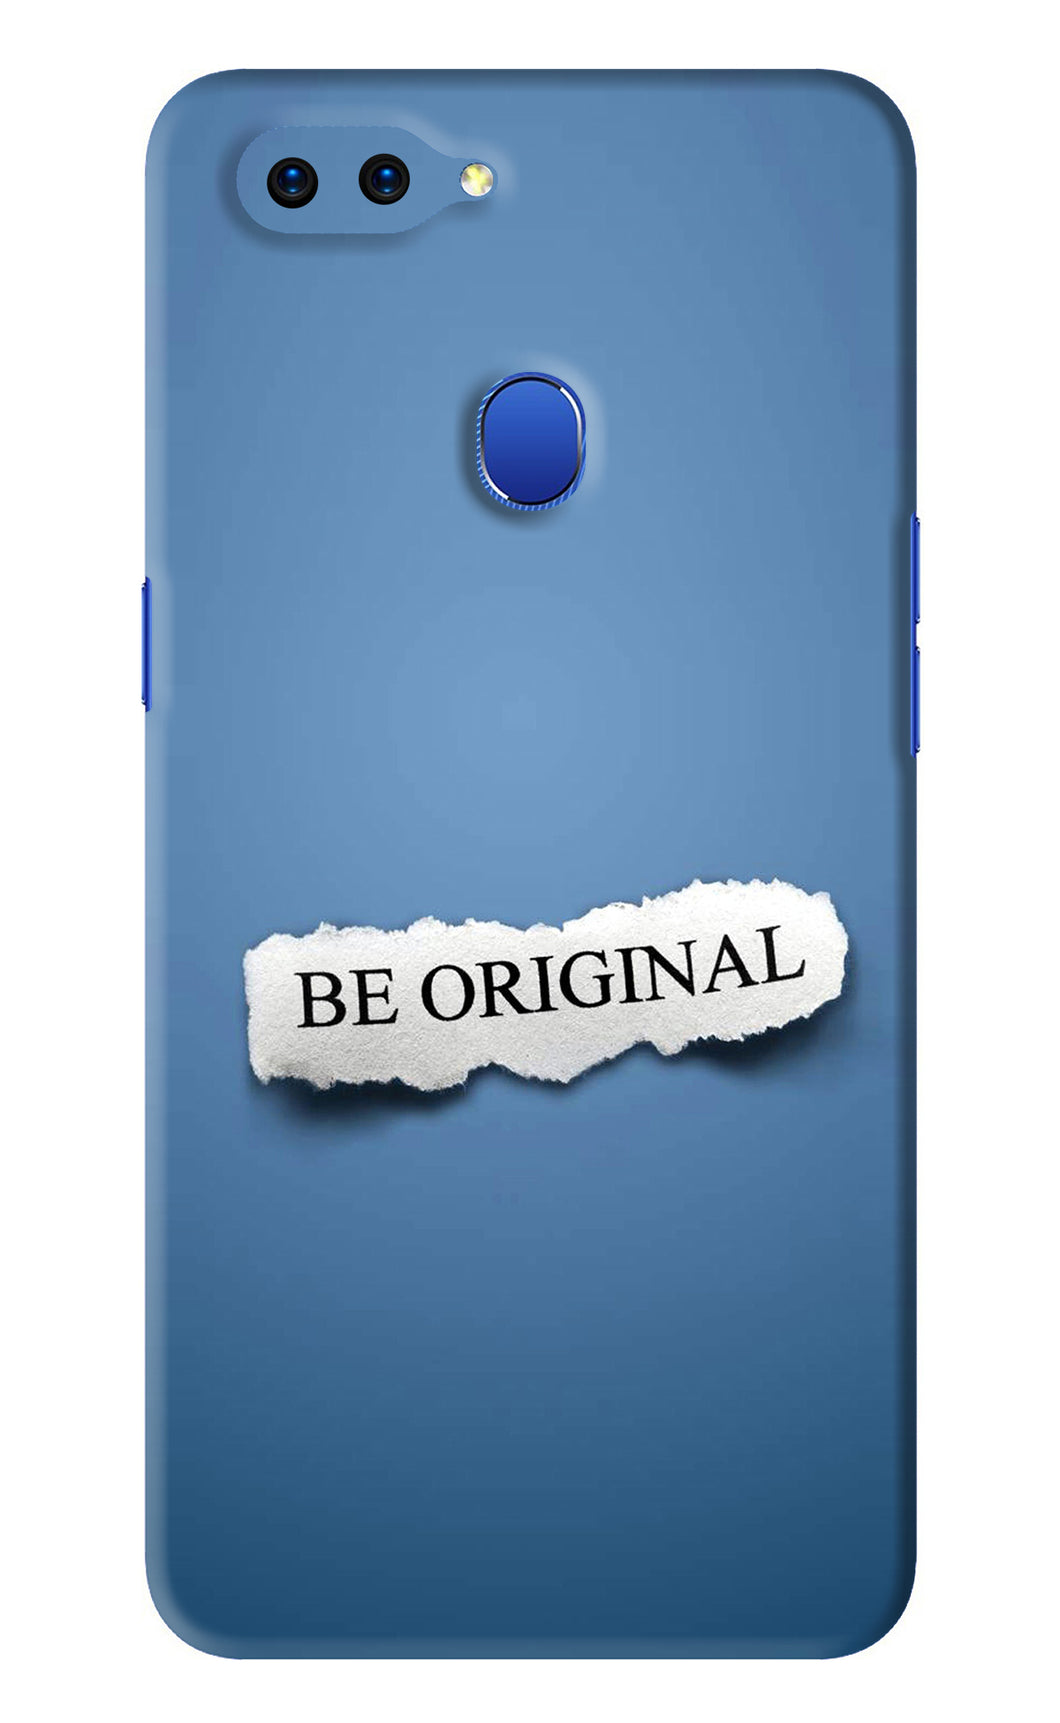 Be Original Oppo A5 Back Skin Wrap